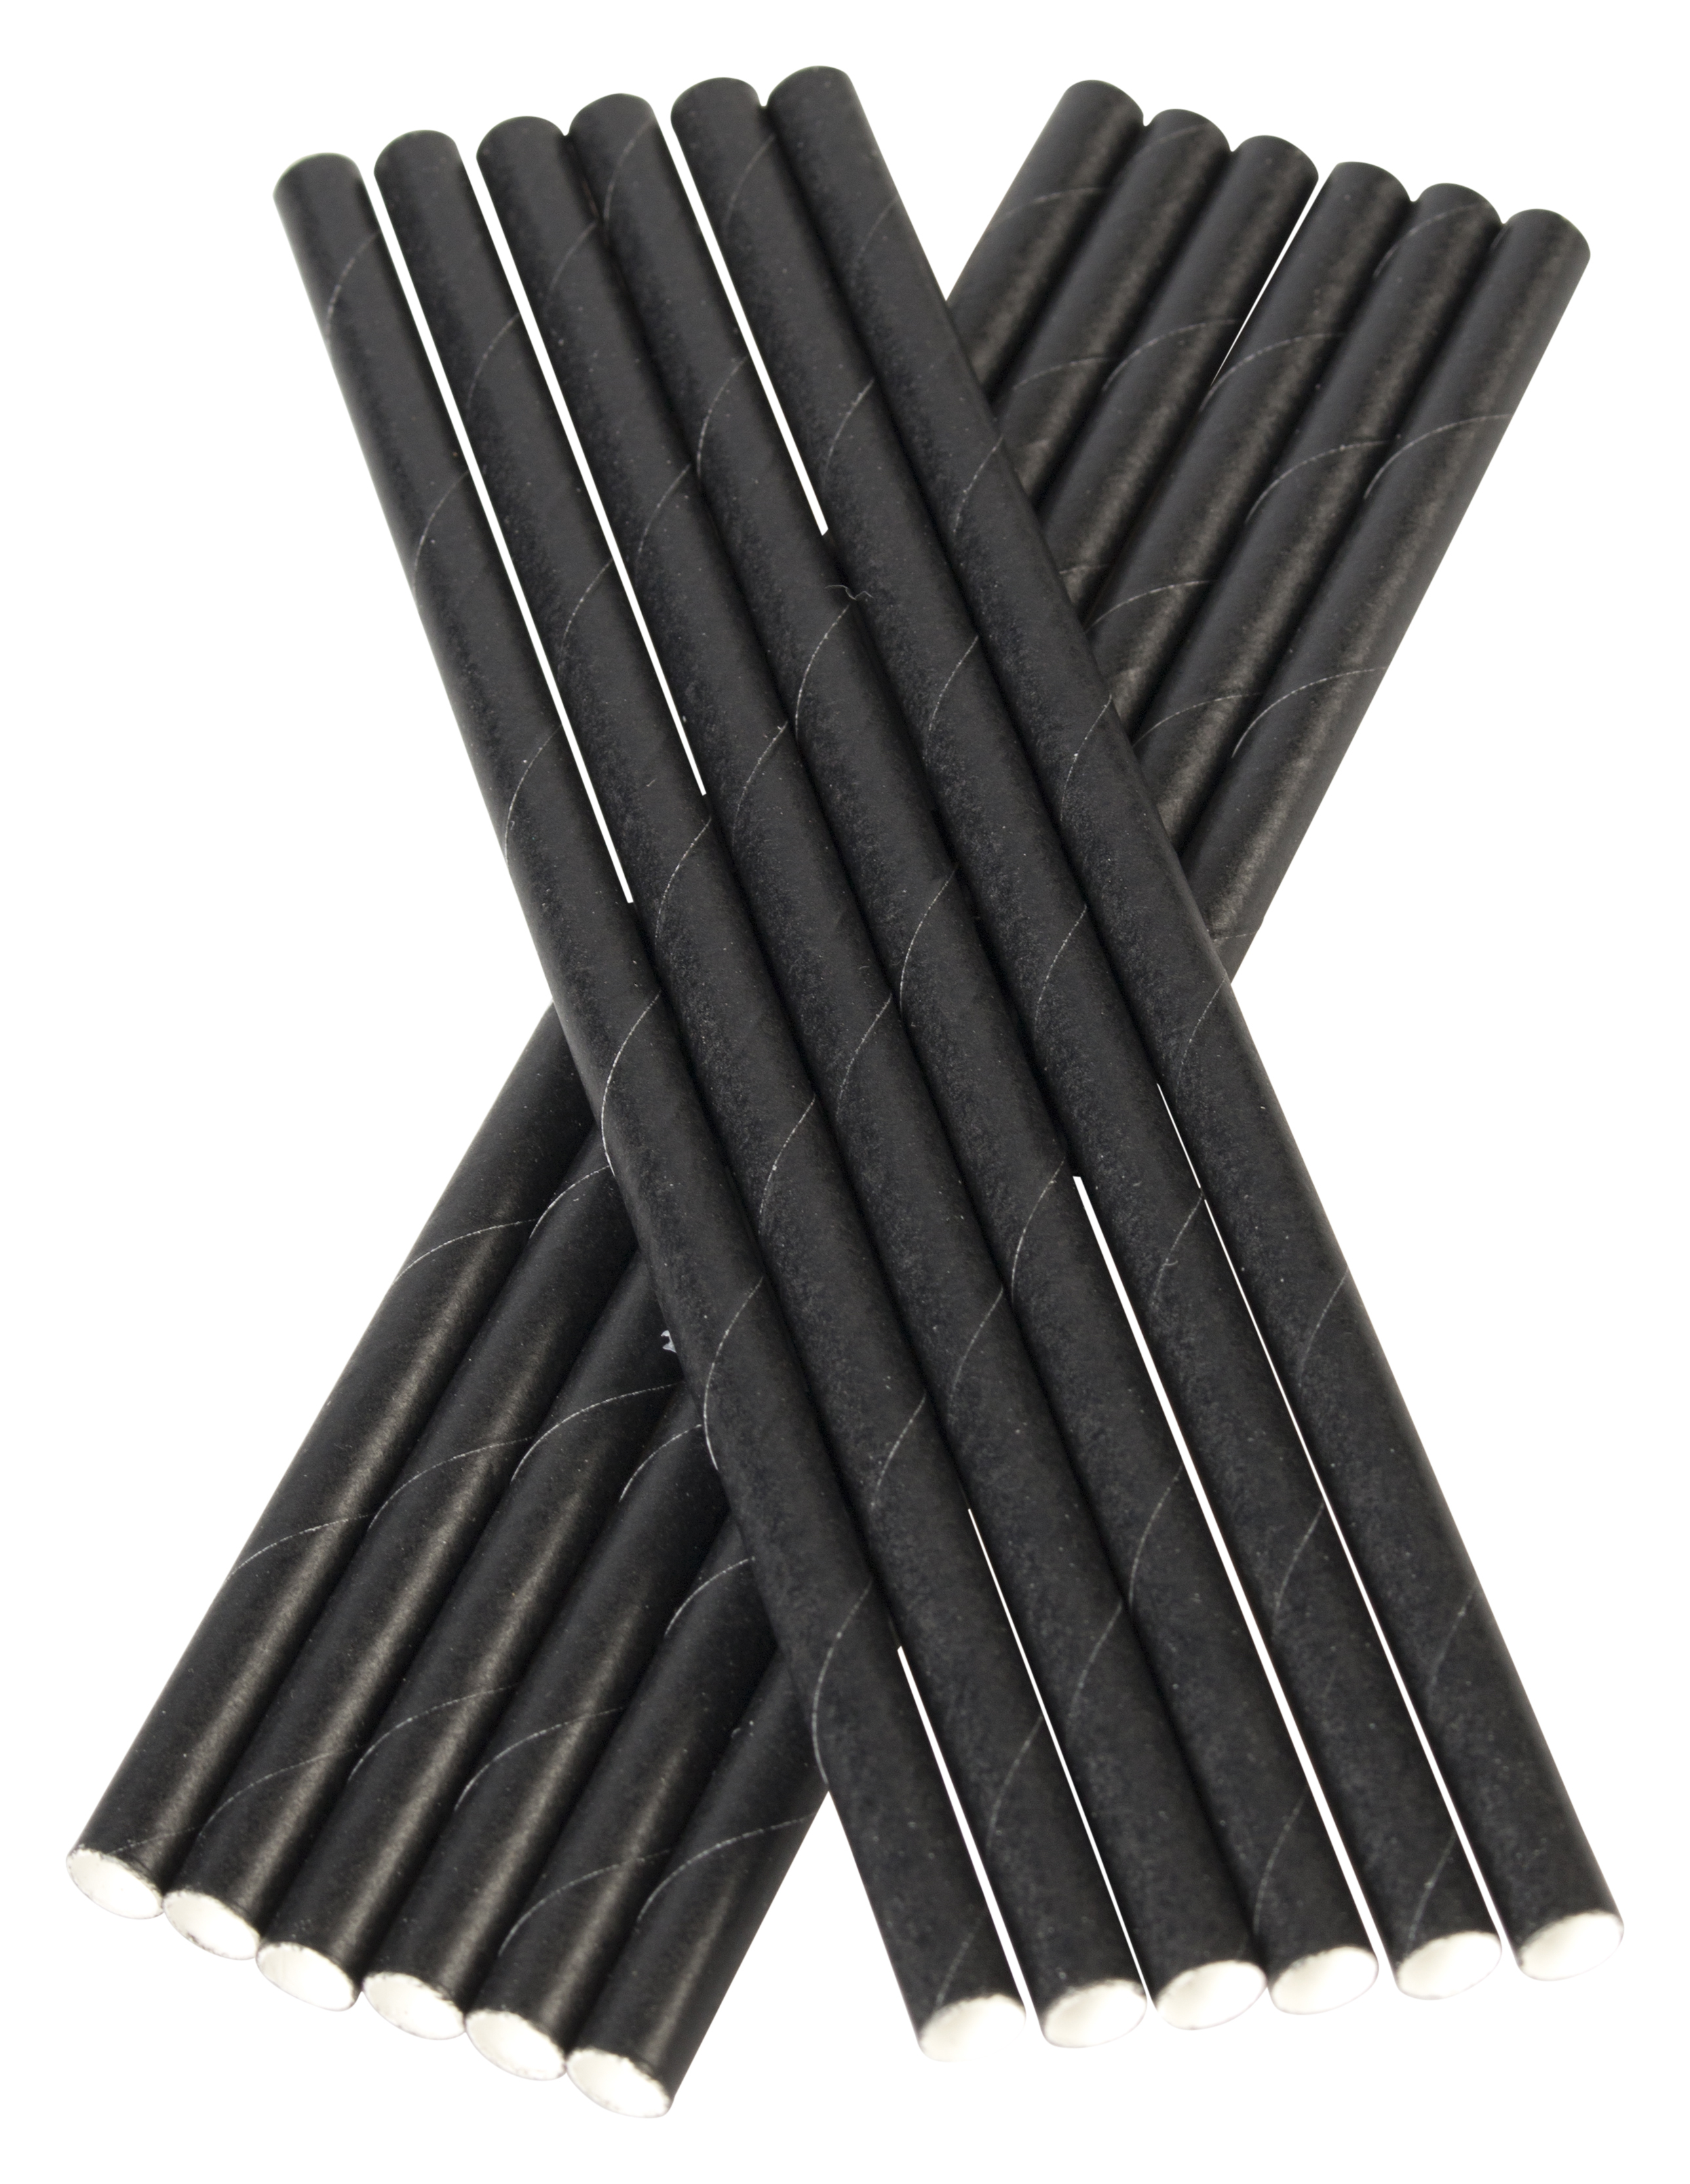 Drinking straws, paper (6x150mm), Prime Bar - black